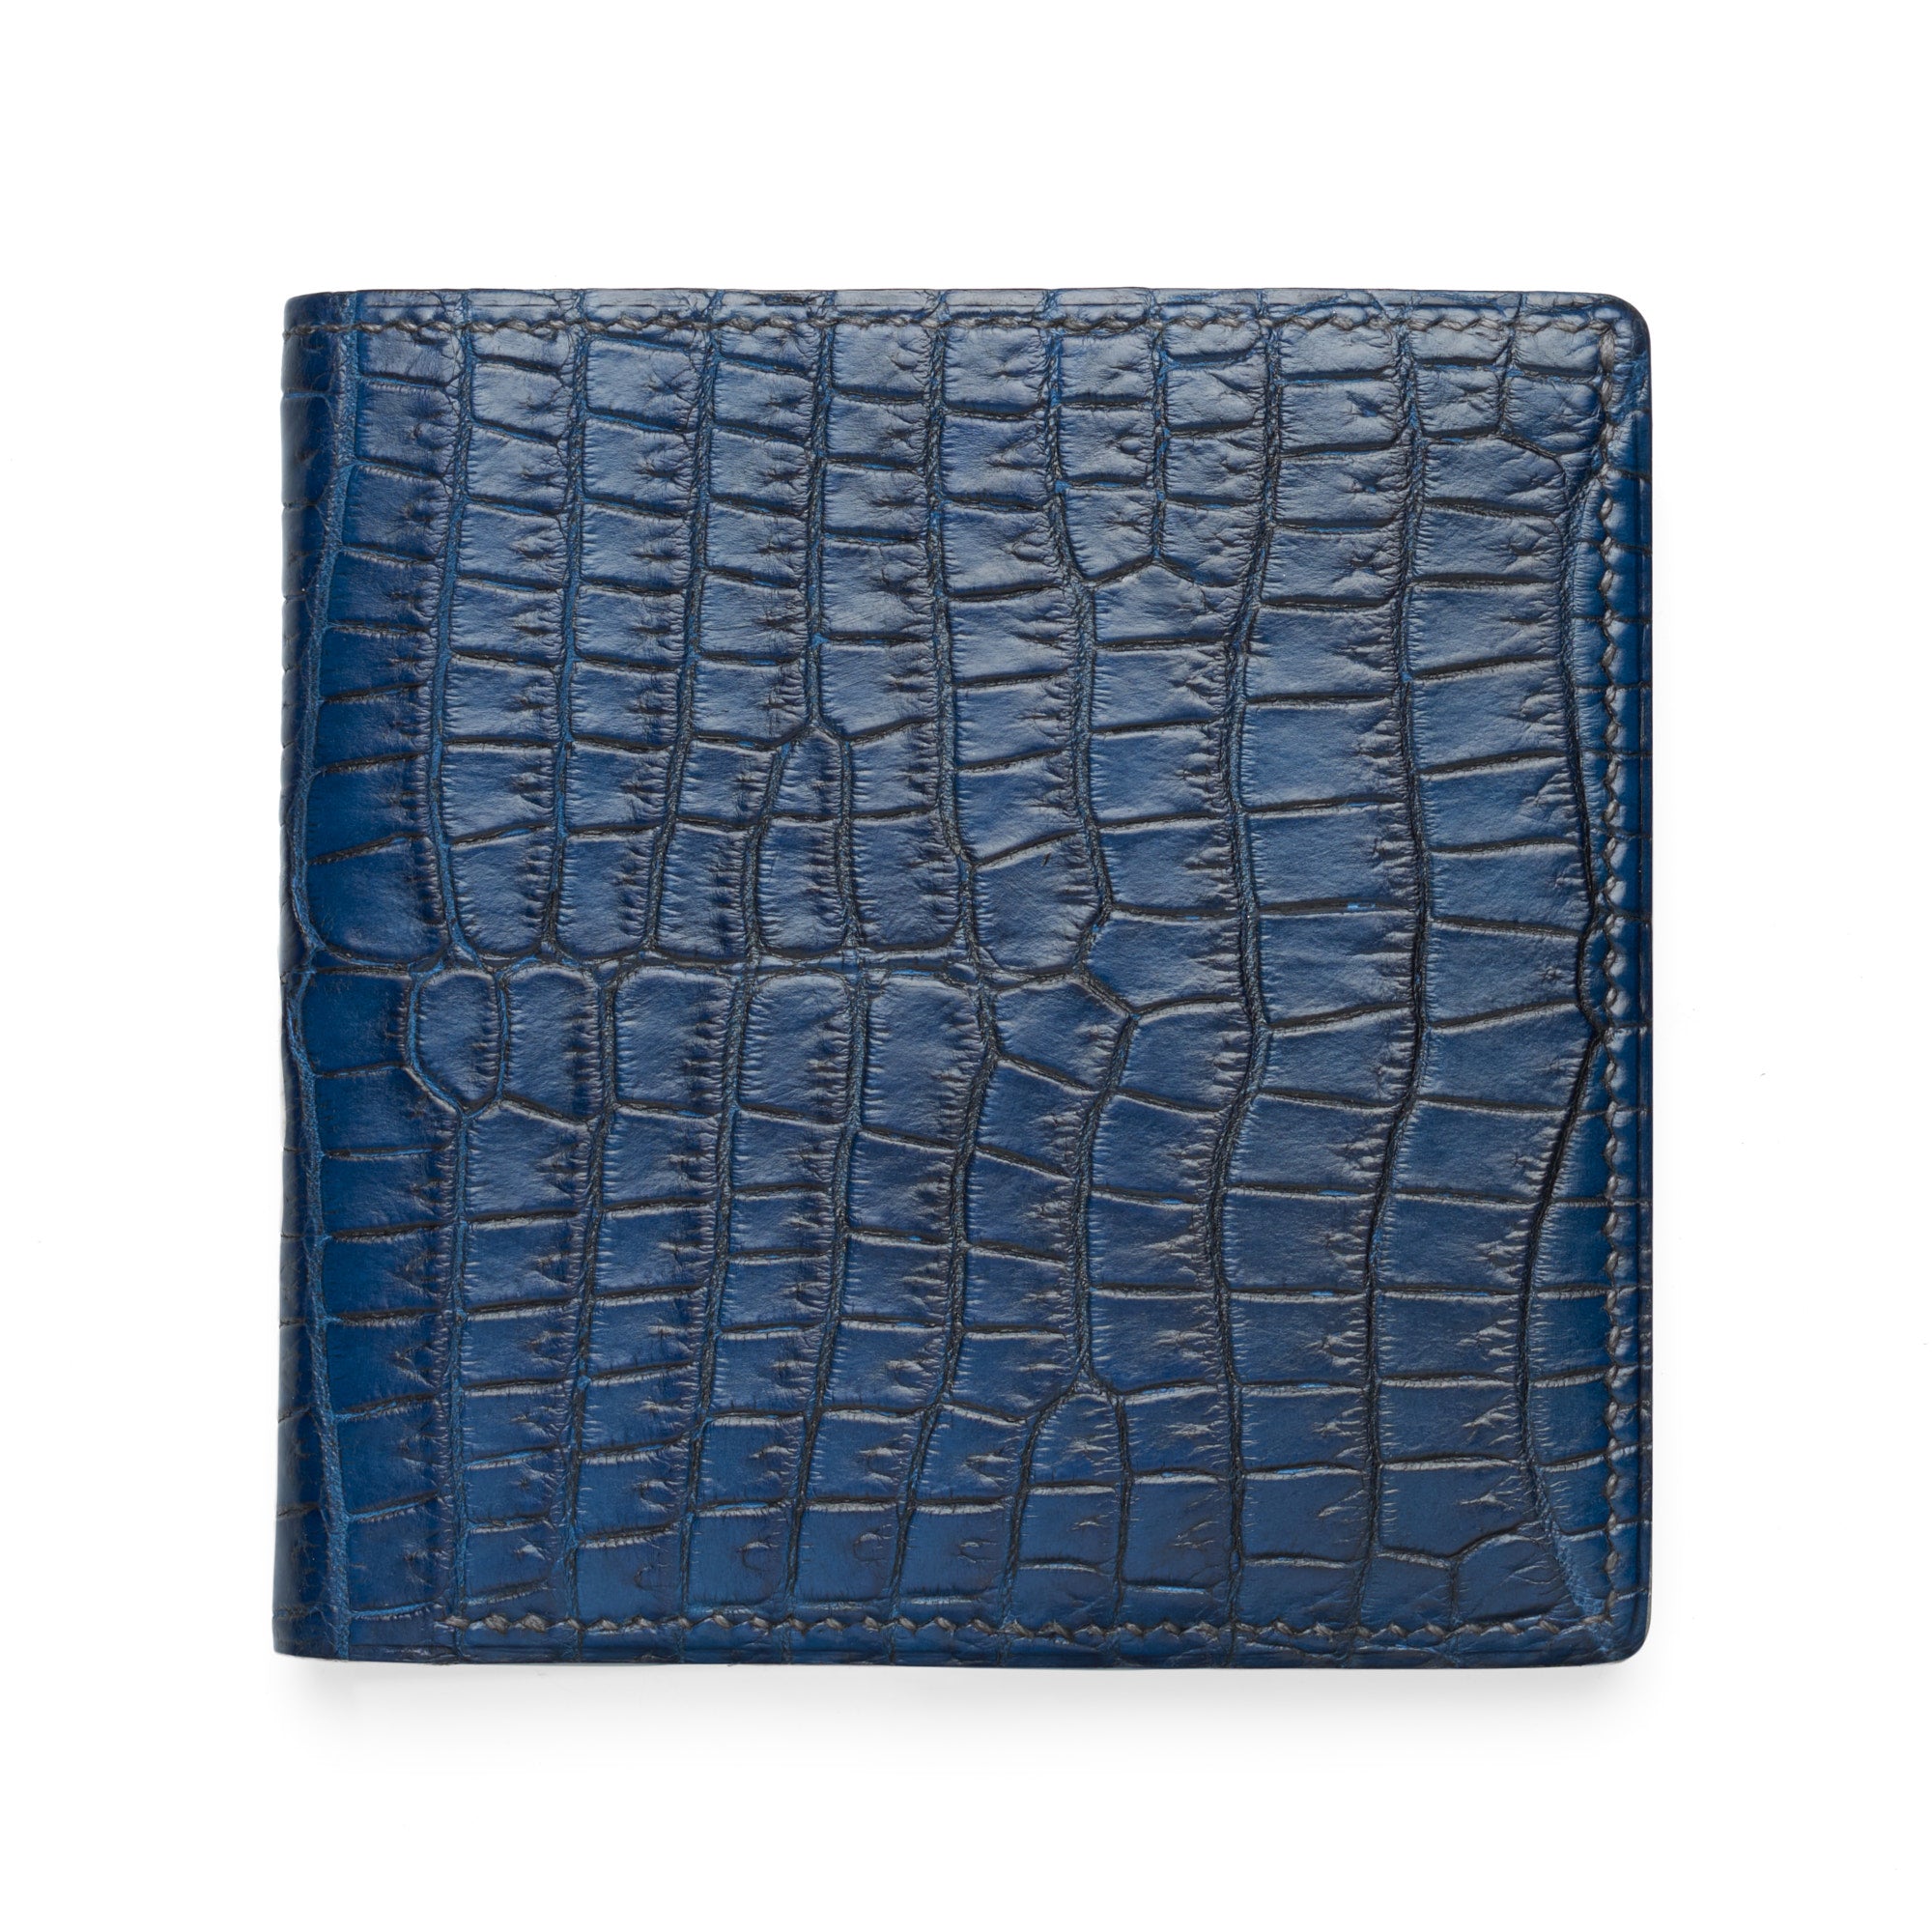 G LANCELOT Paris Blue Crocodile Leather Billfold Card Holder Wallet NEW with Pouch G LANCELOT